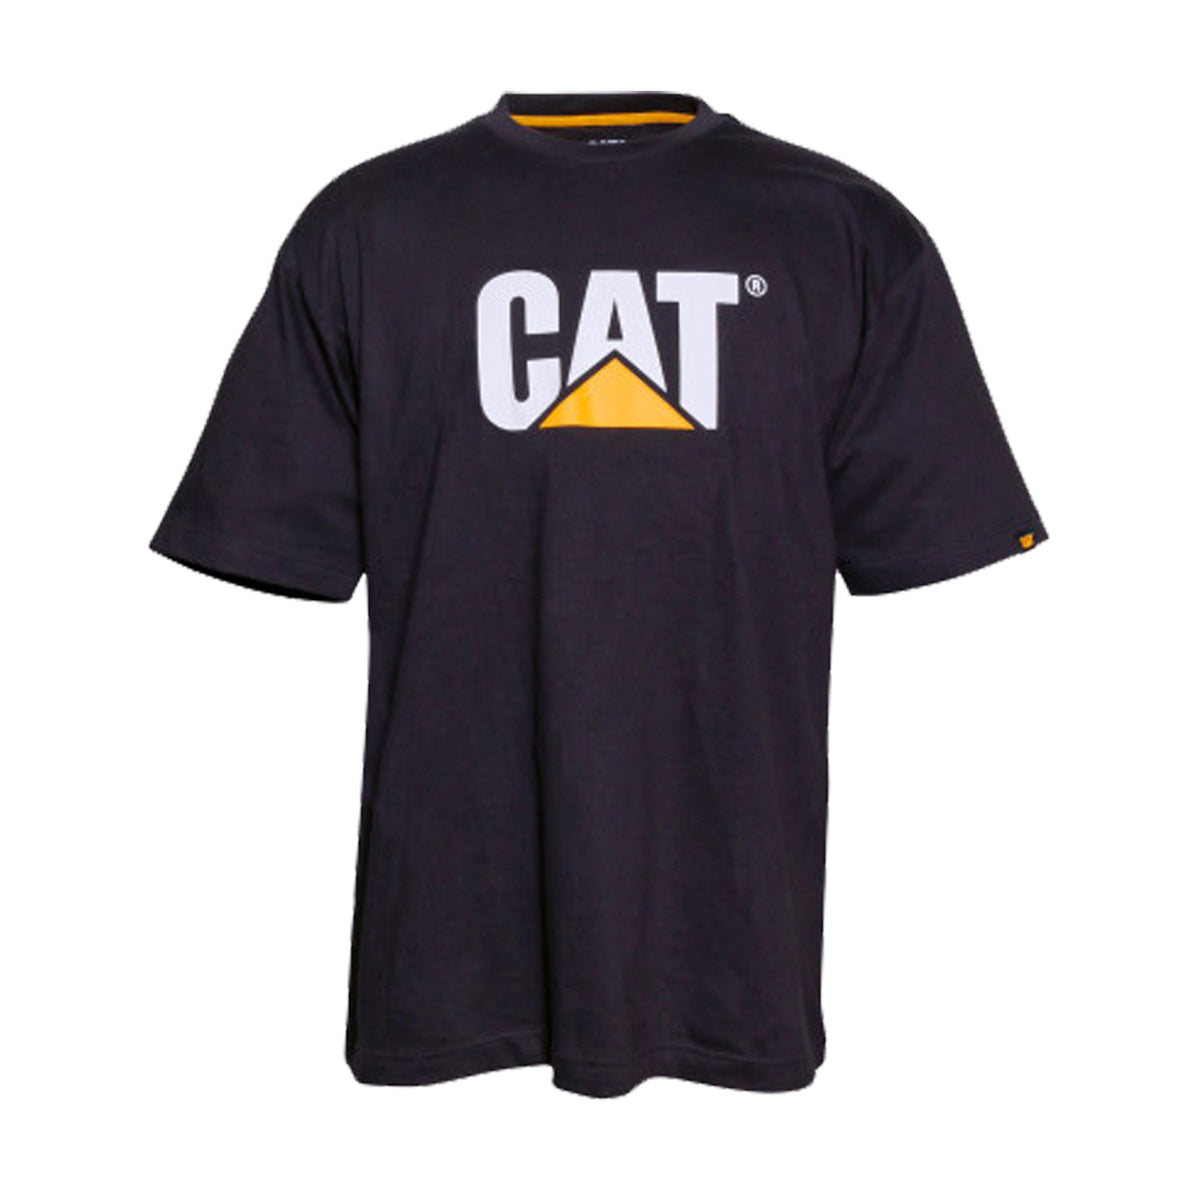 cat workwear trademark logo tee in black